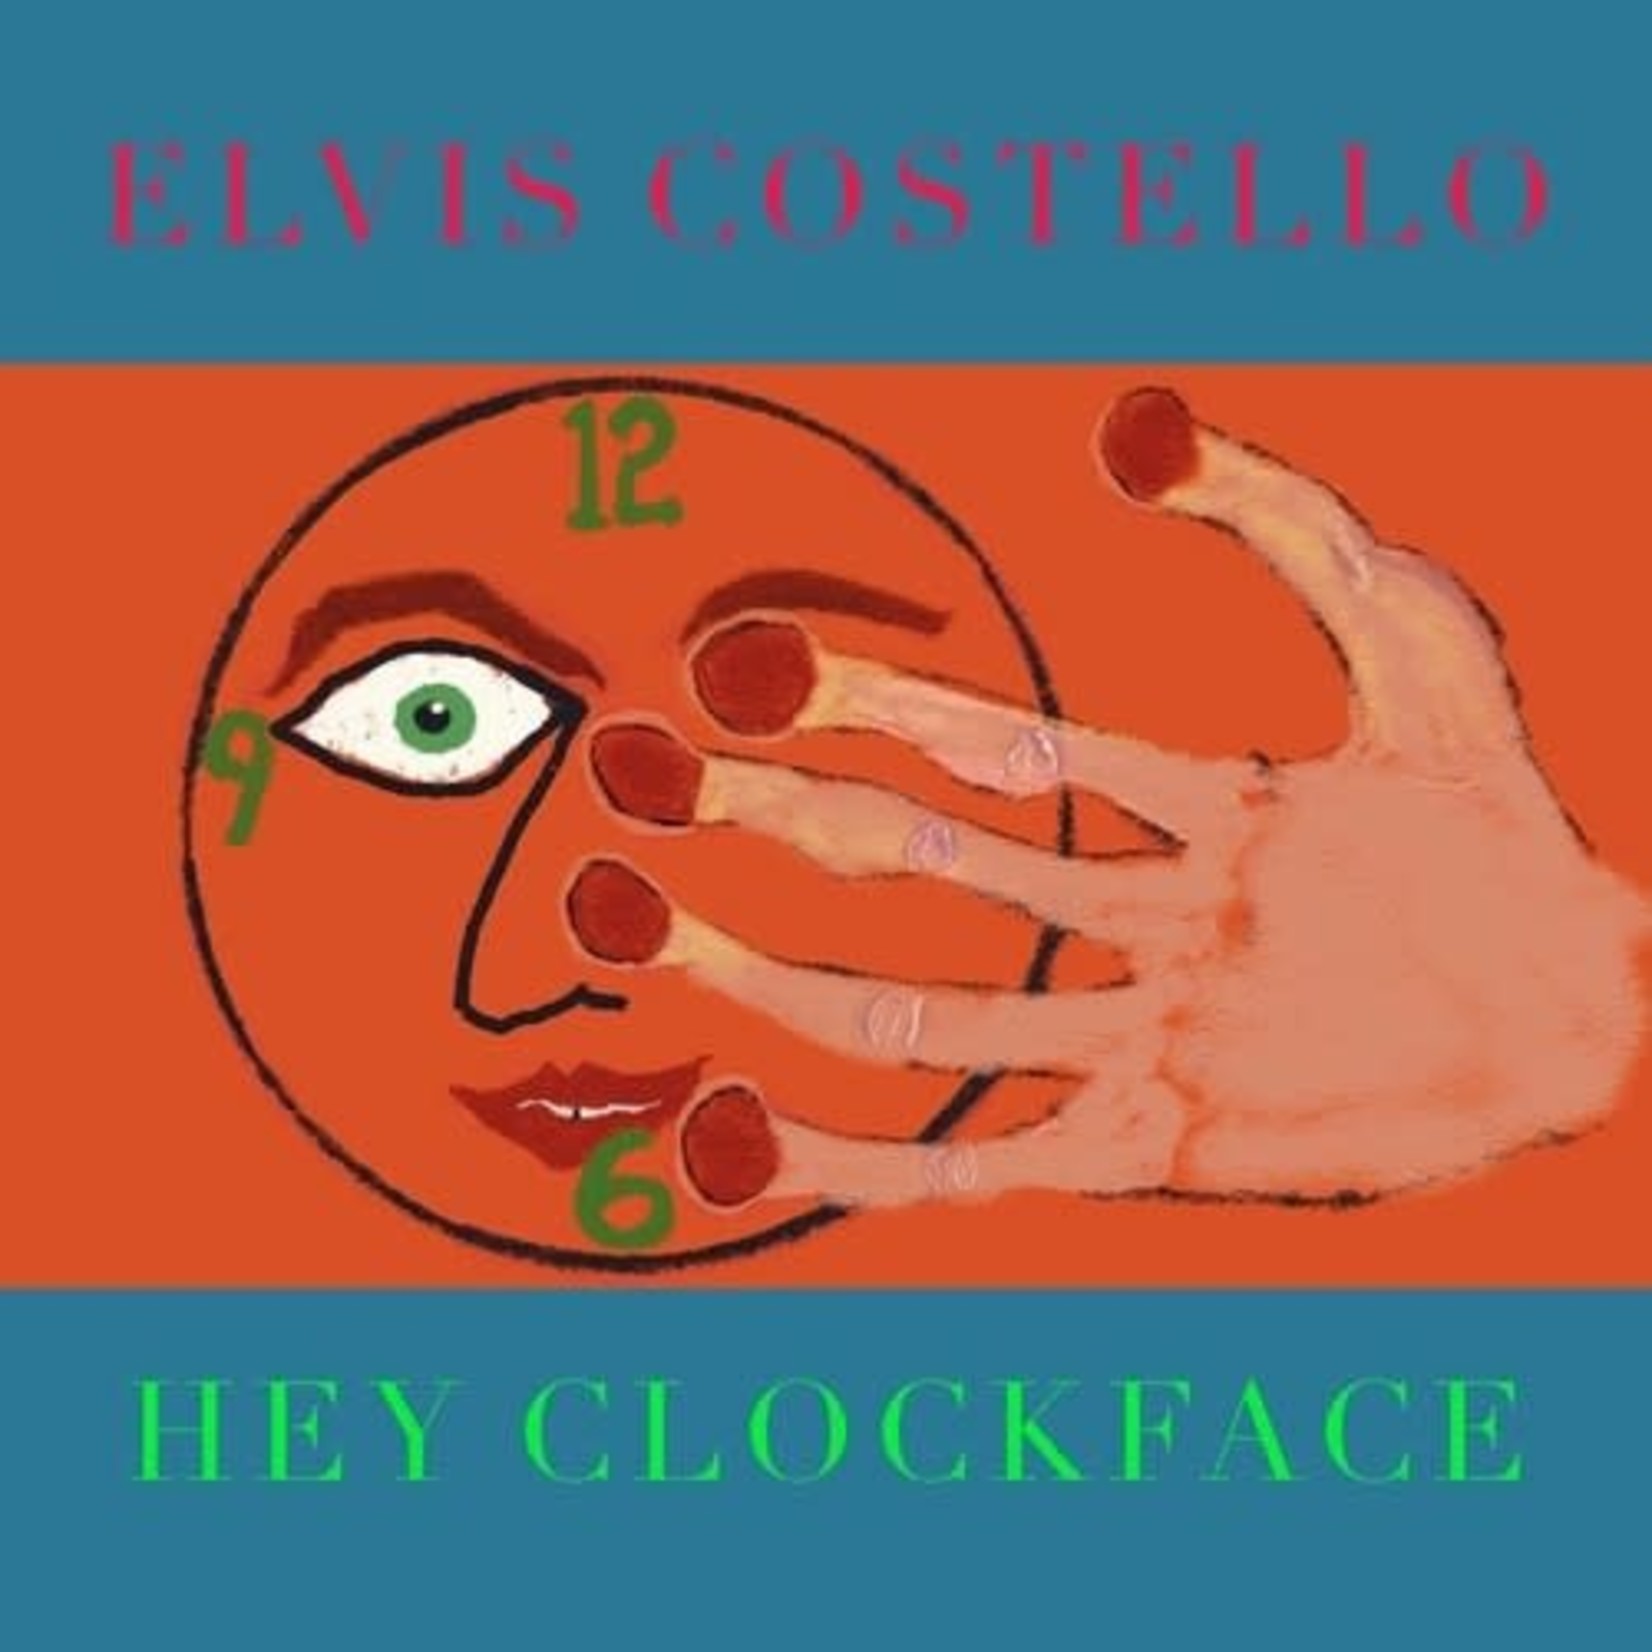 Concord Elvis Costello - Hey Clockface (2LP) [Red]